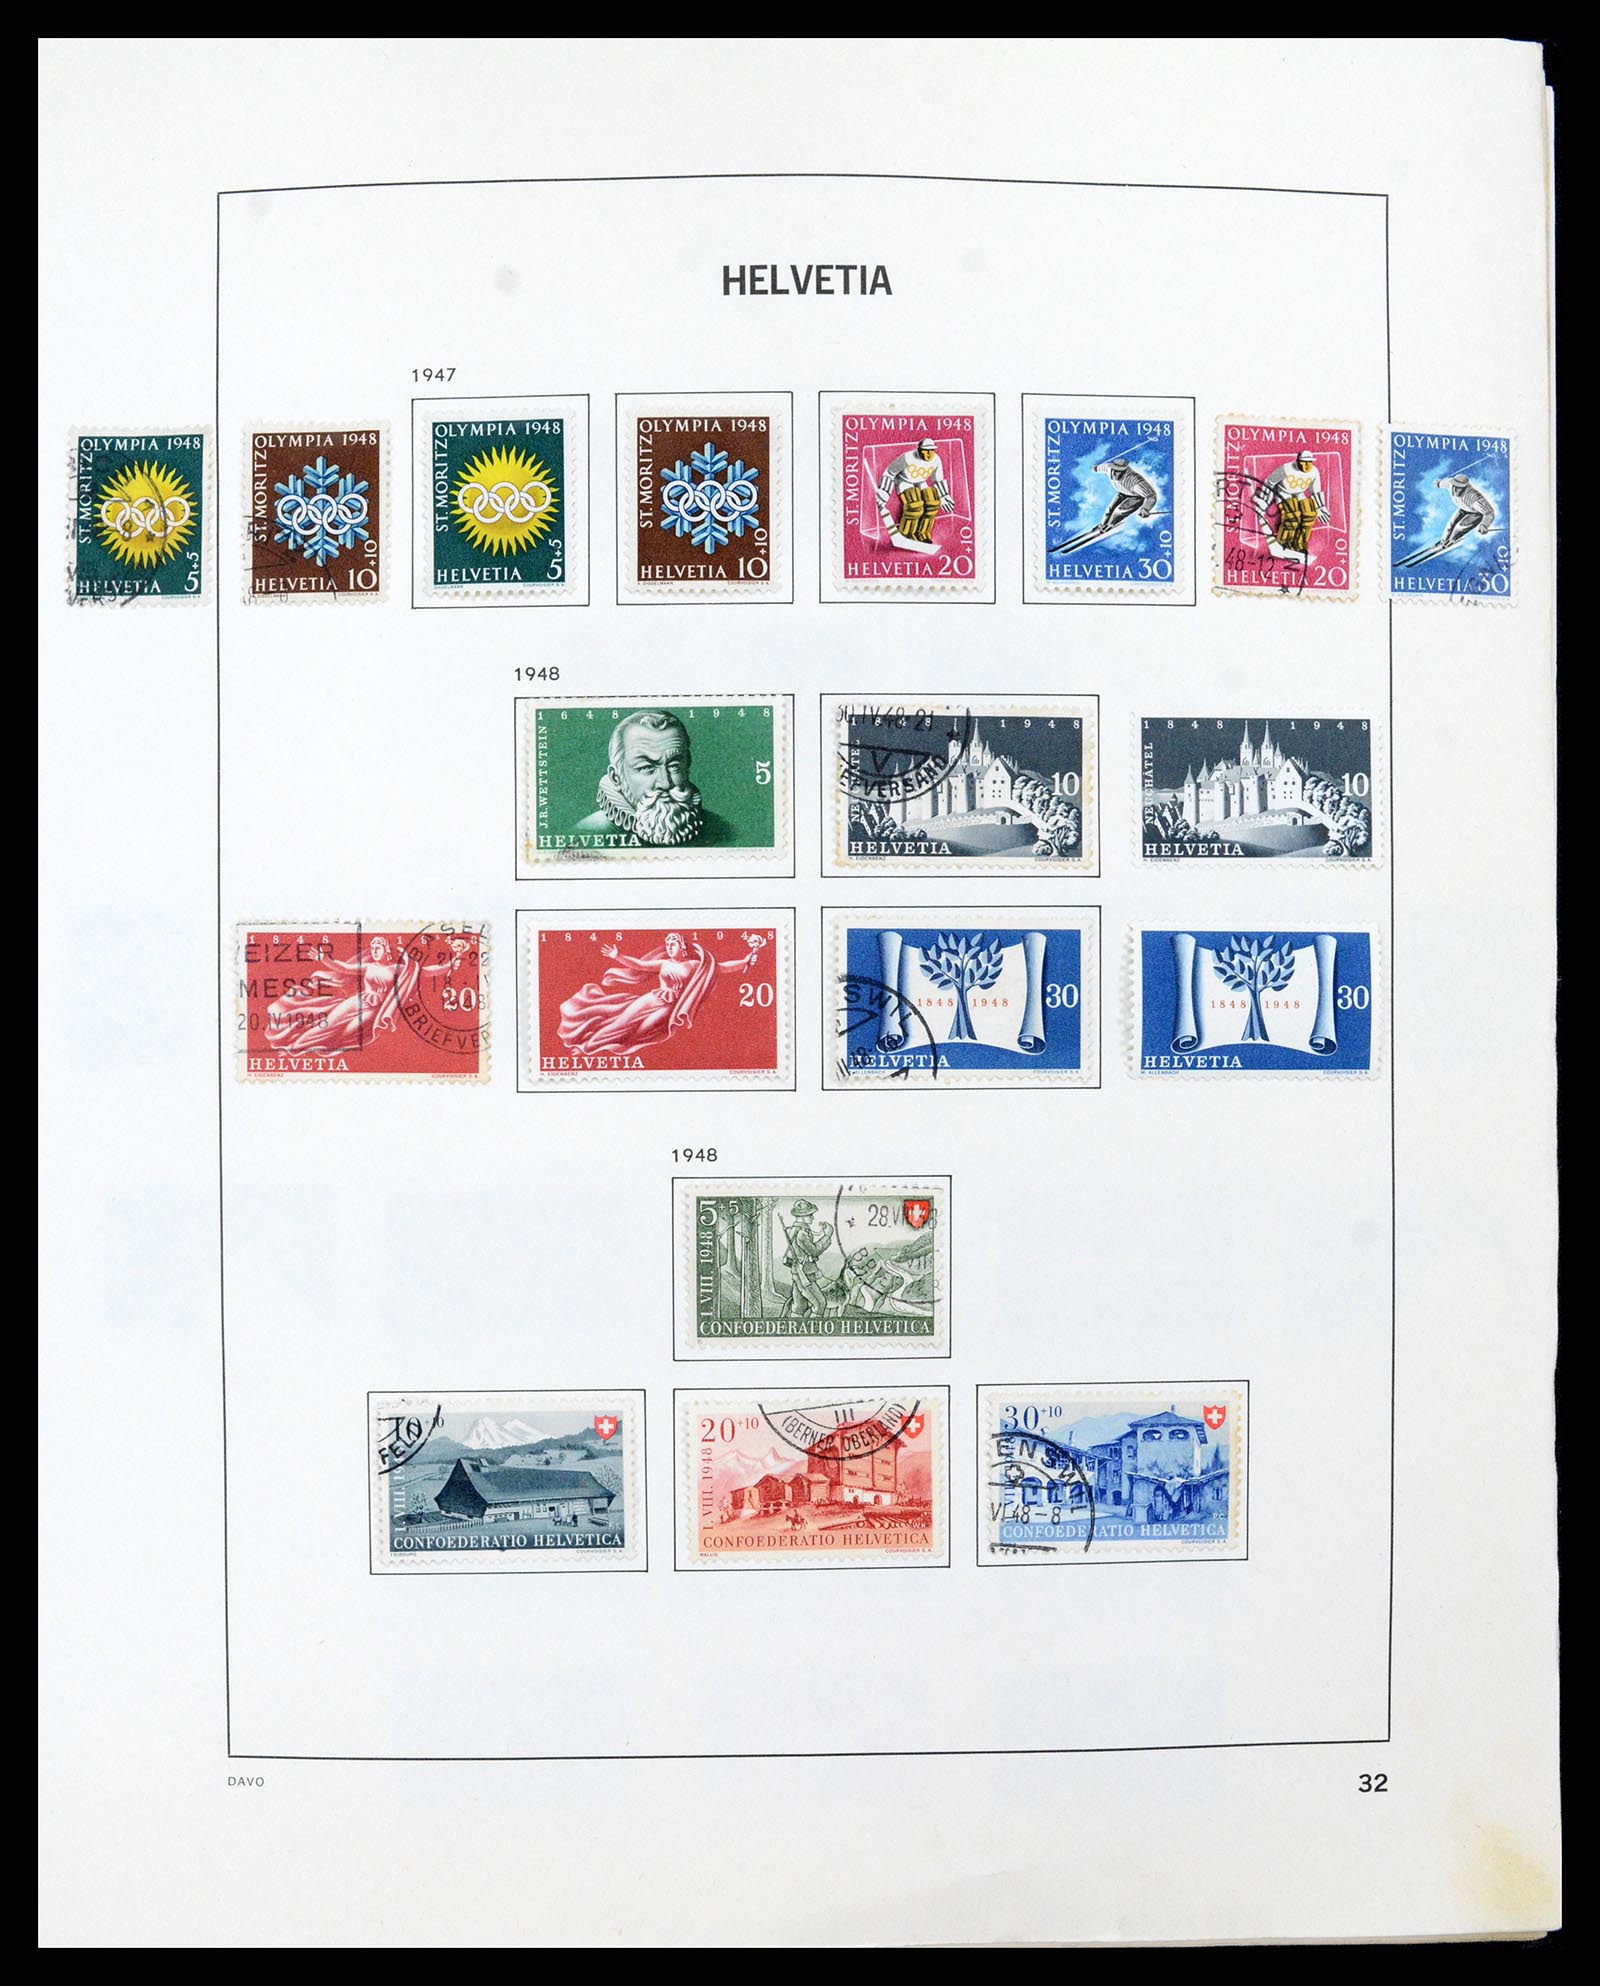 37496 031 - Stamp collection 37496 Switzerland 1854-2002.